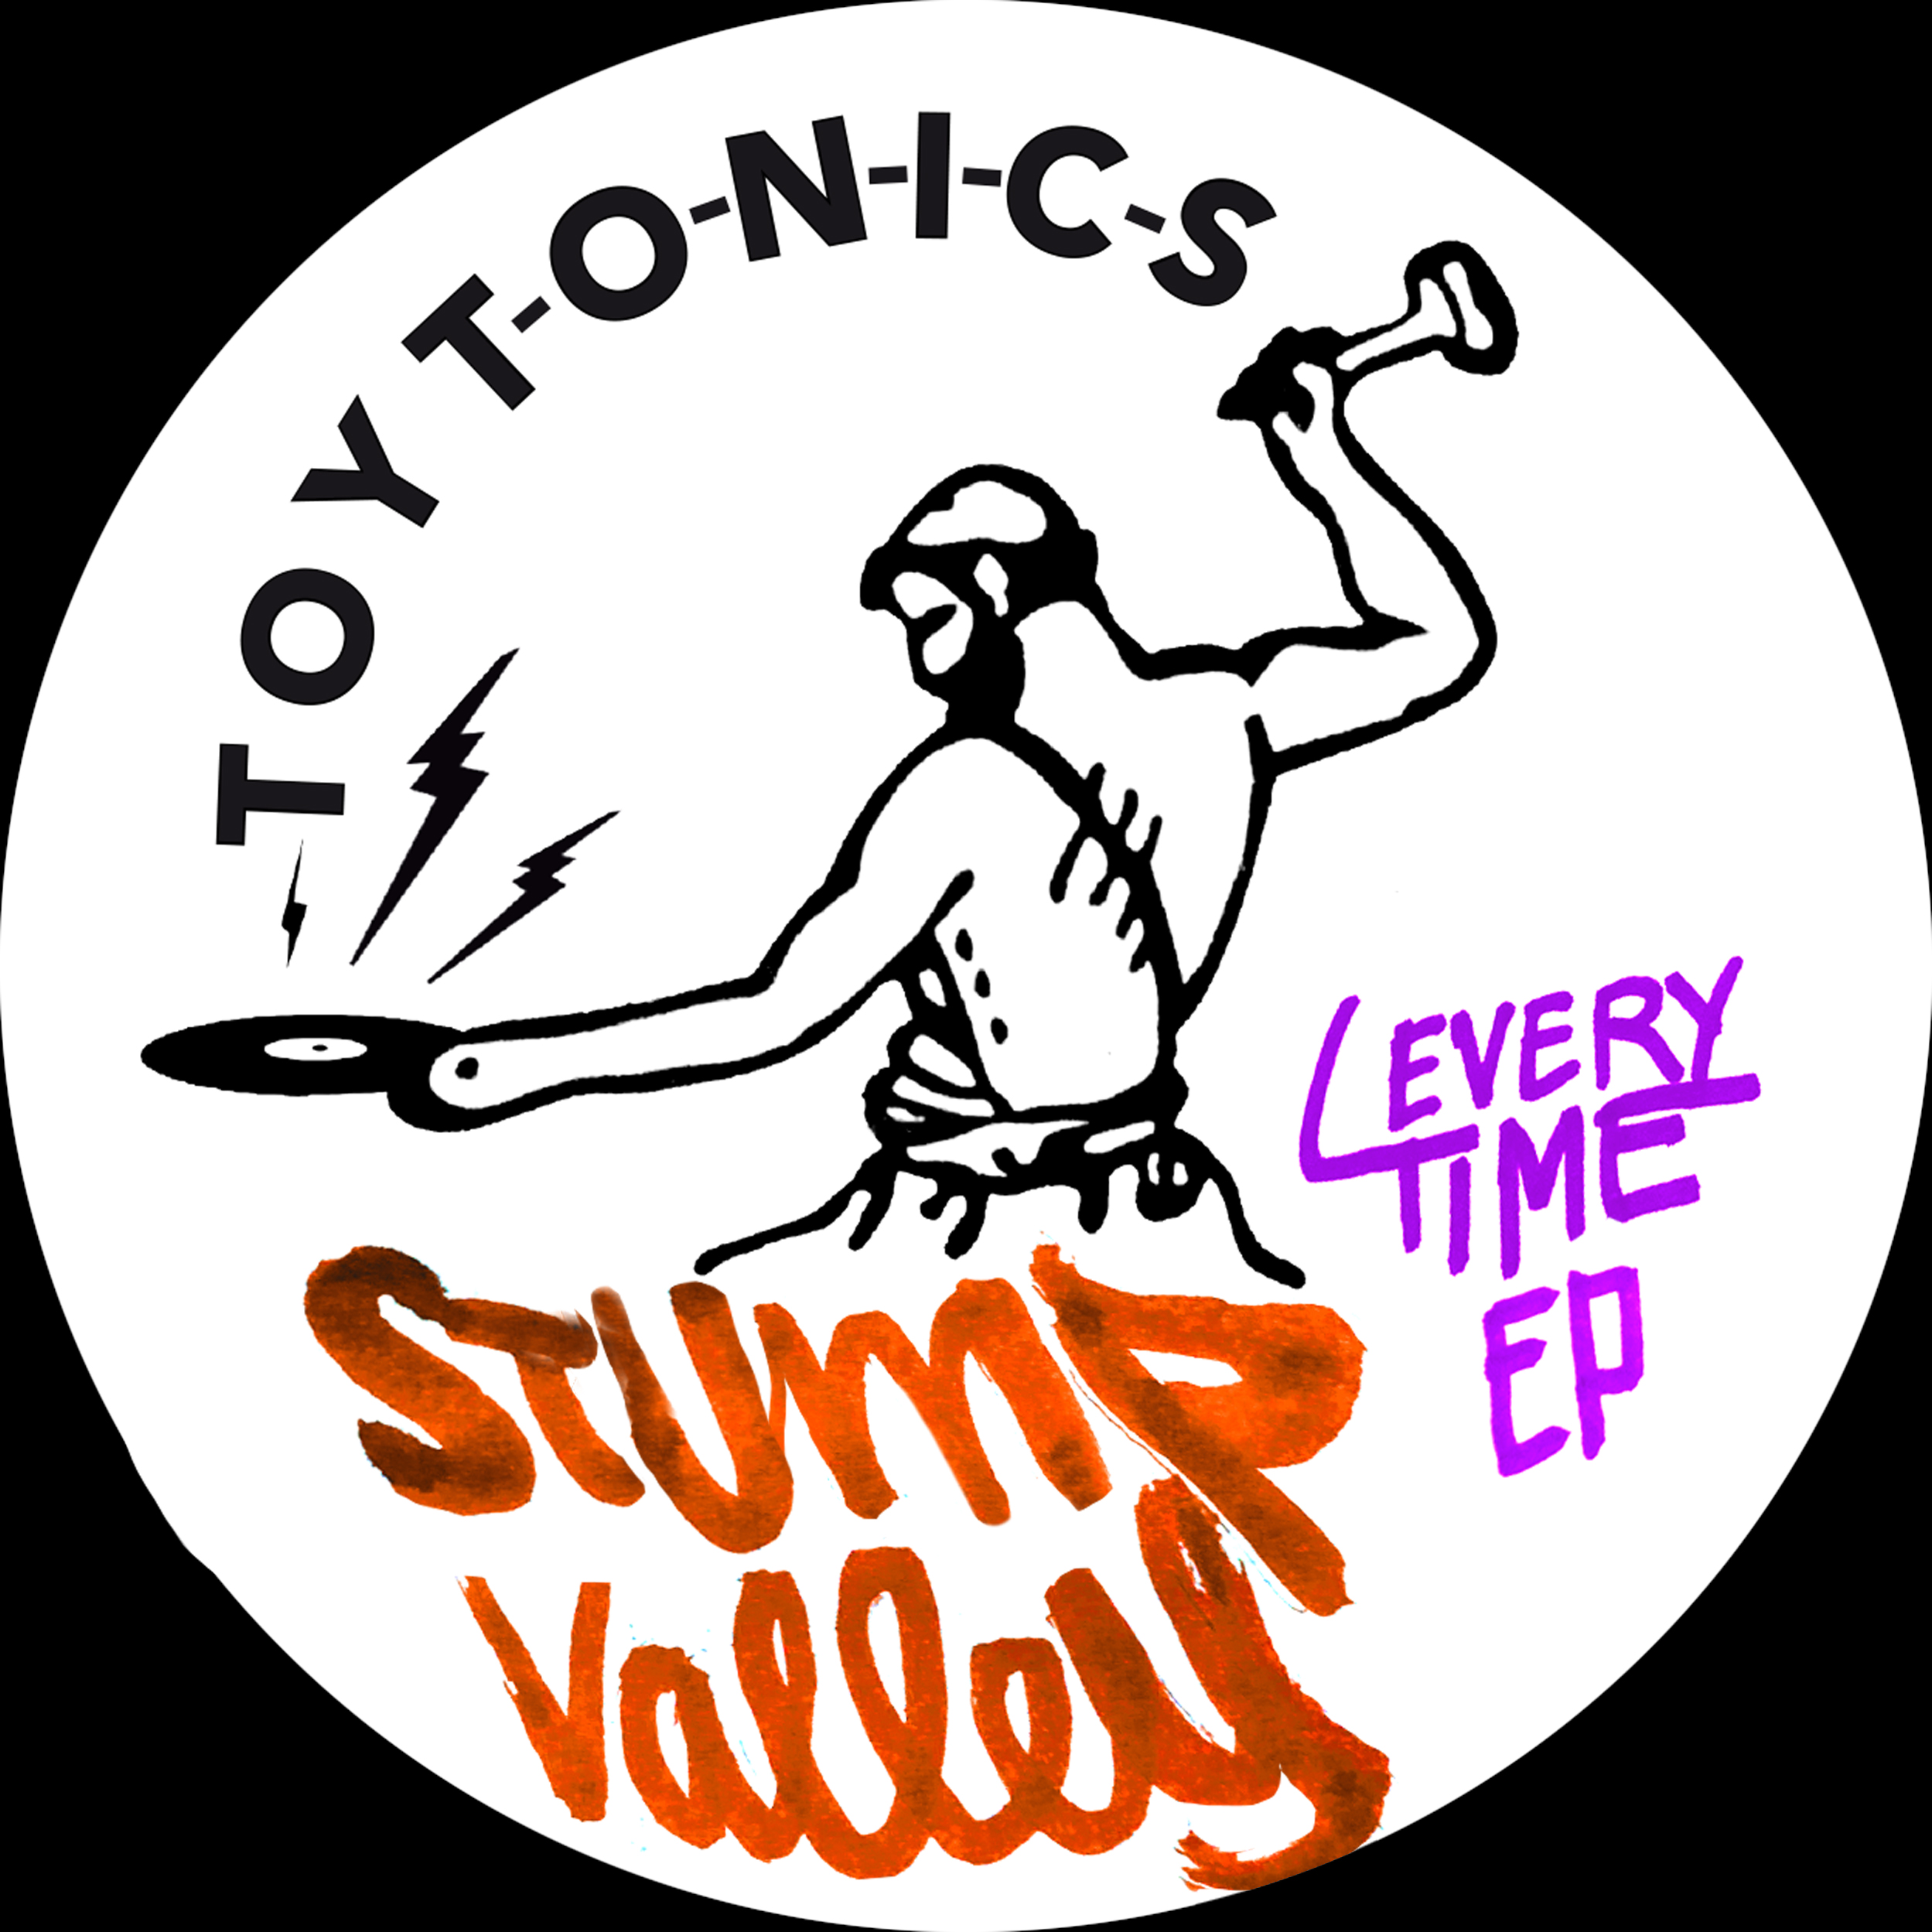 Stump Valley - Everytime EP [TOYT158]